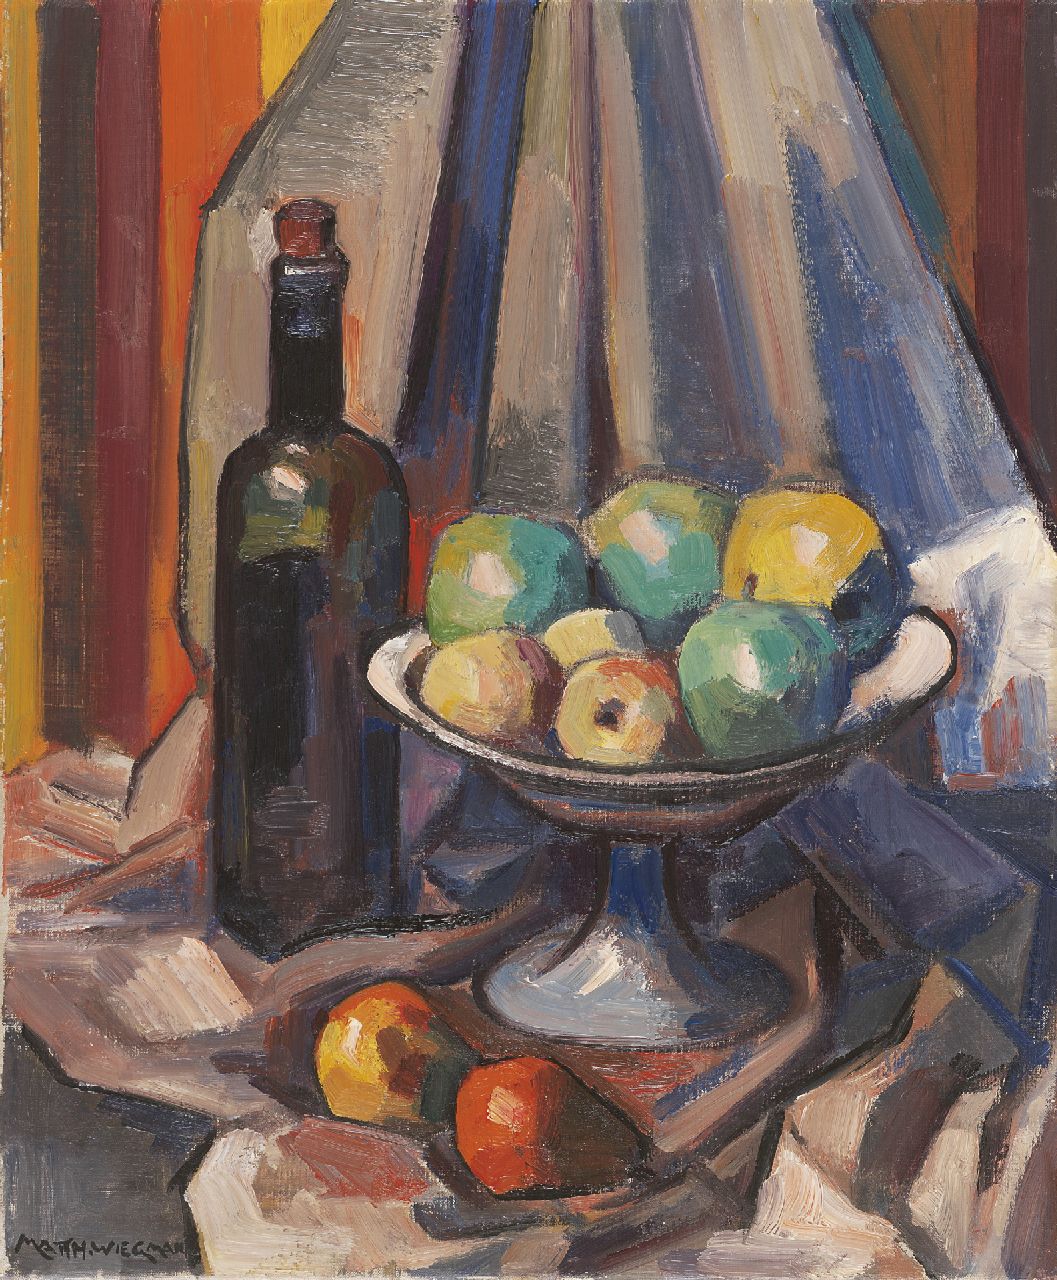 Wiegman M.J.M.  | Mattheus Johannes Marie 'Matthieu' Wiegman, A still life with a bowl of fruit and a bottle, oil on canvas 46.0 x 38.2 cm, signed l.l.